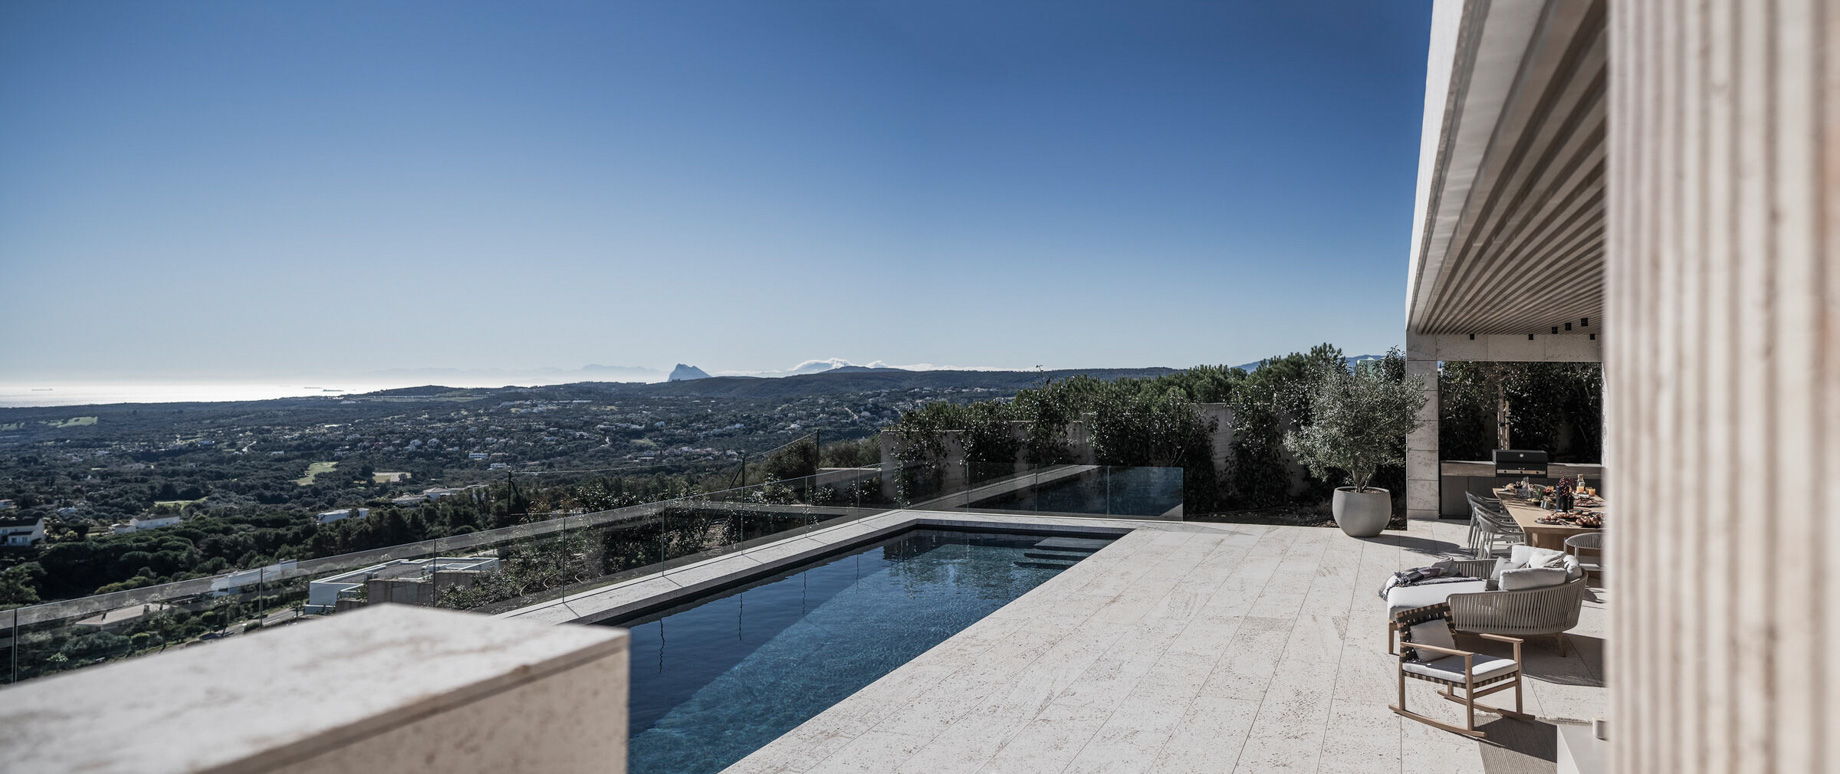 Villa Blue Modern Contemporary Residence – La Reserva Sotogrande, Spain – 29